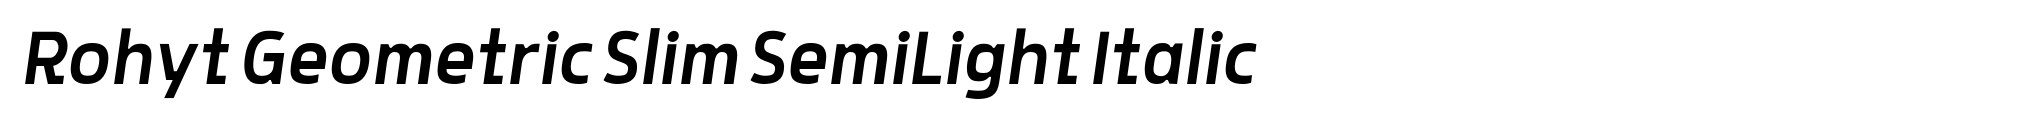 Rohyt Geometric Slim SemiLight Italic image